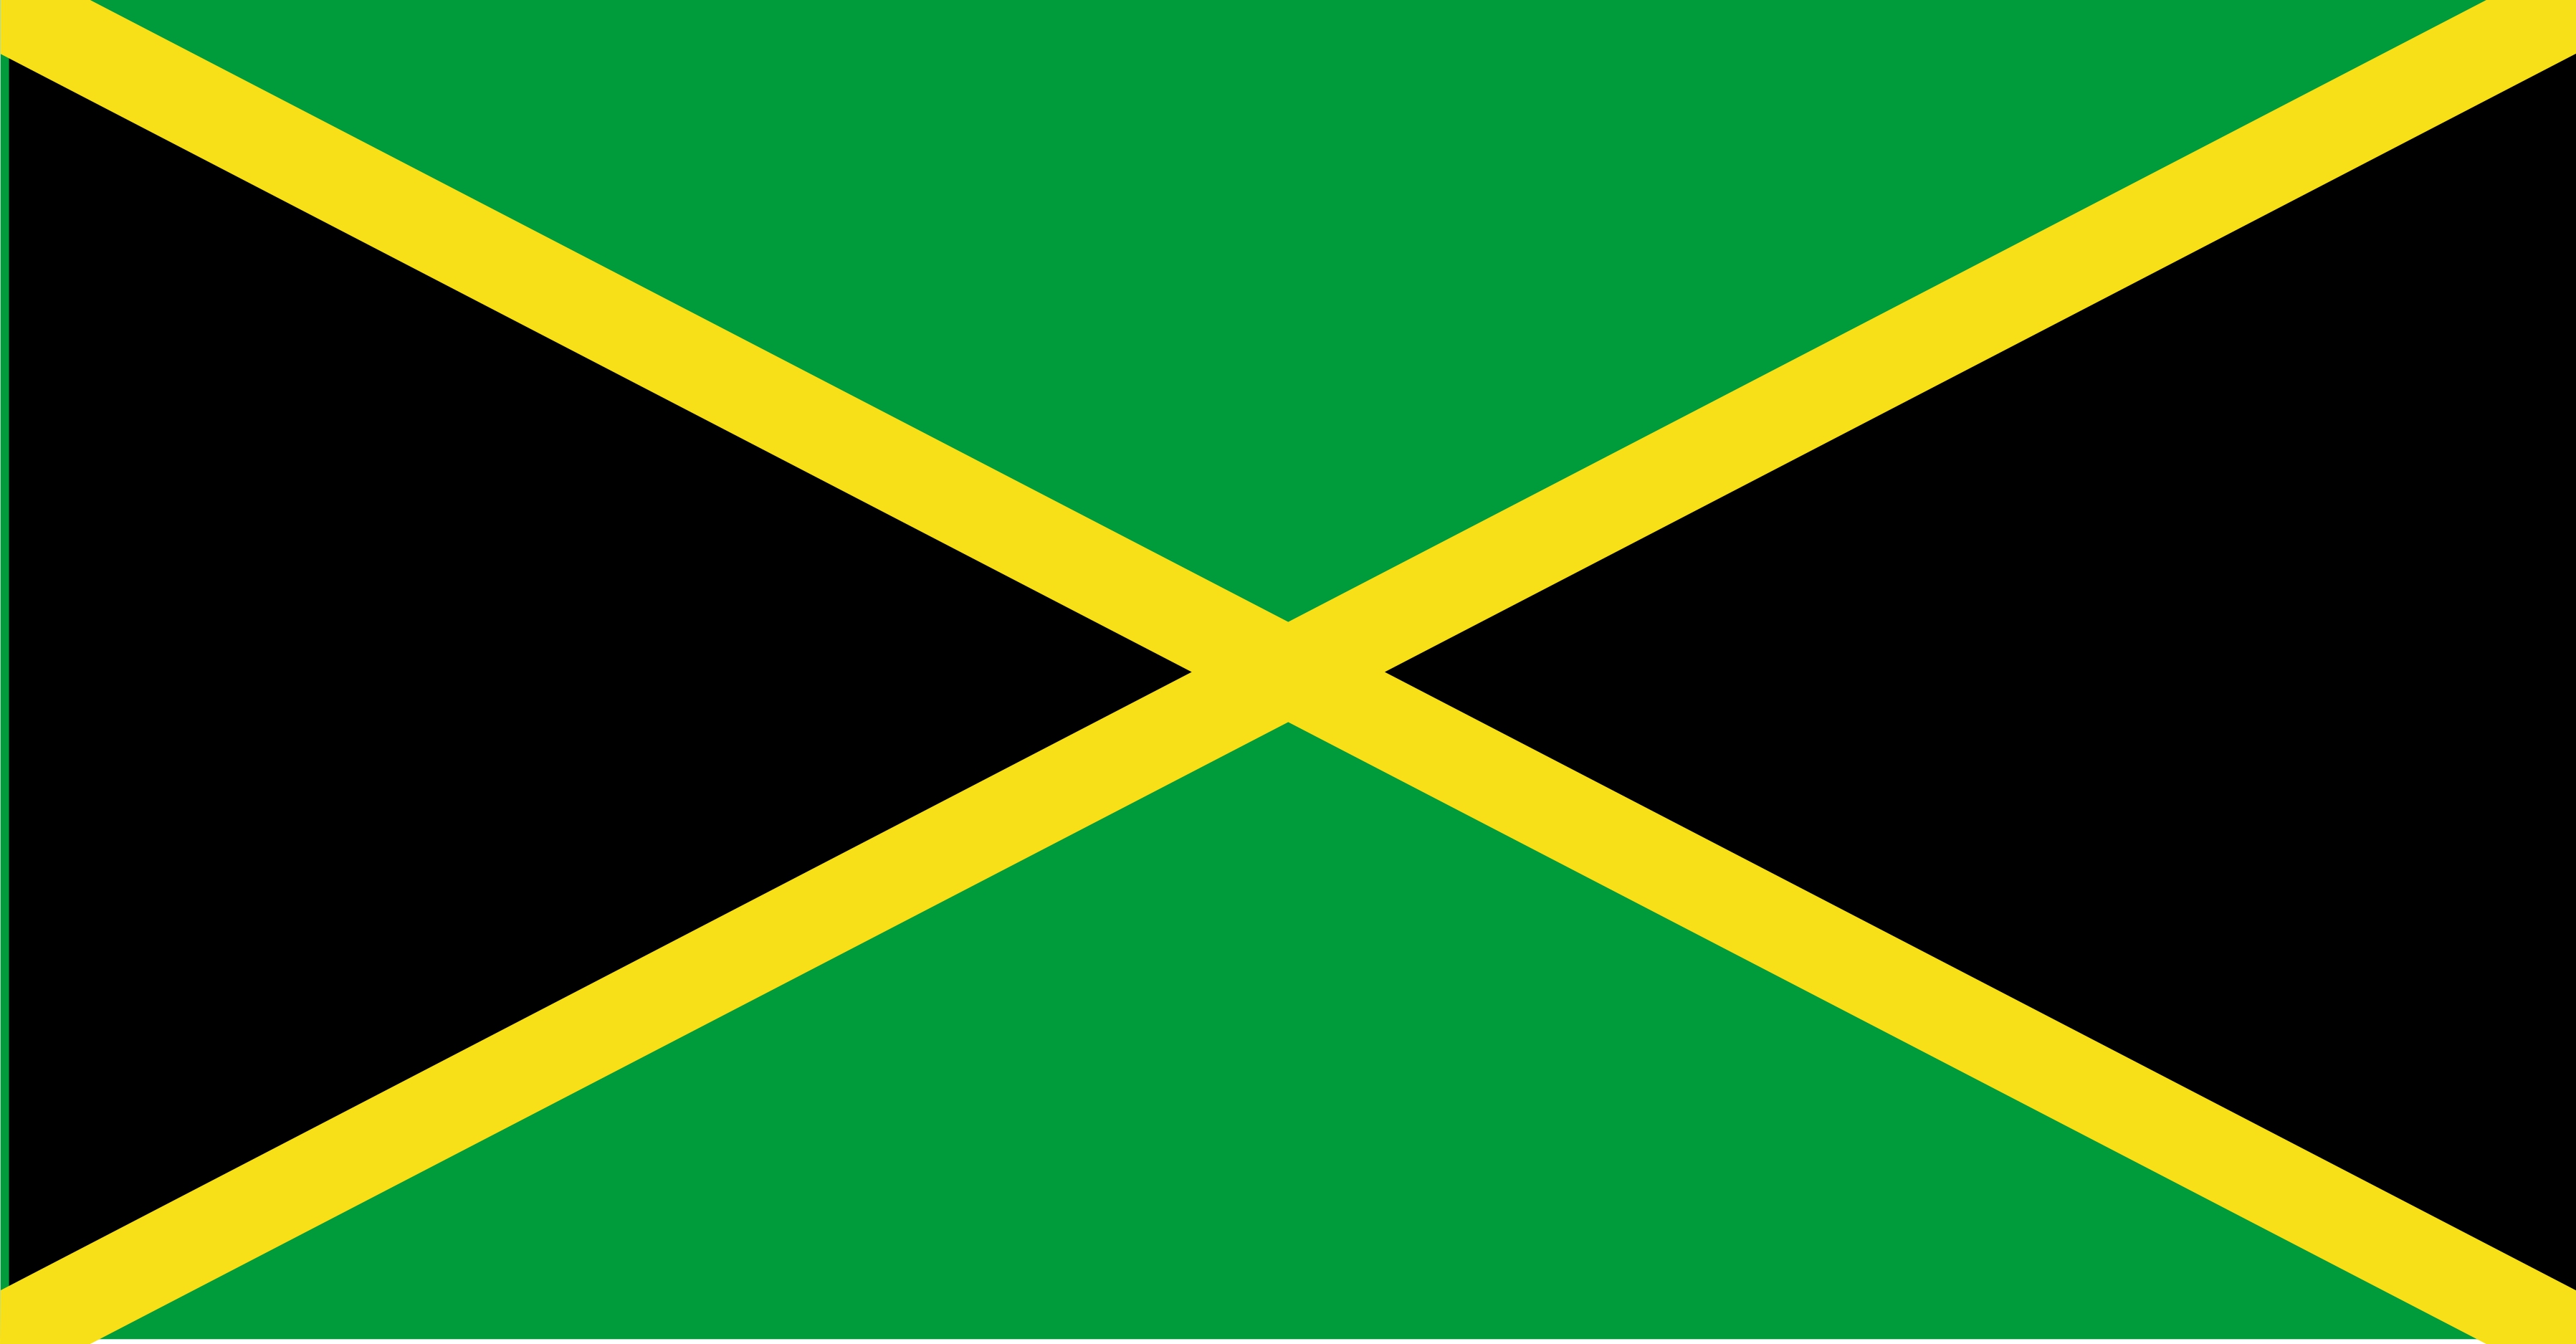 Printable Jamaica Flag